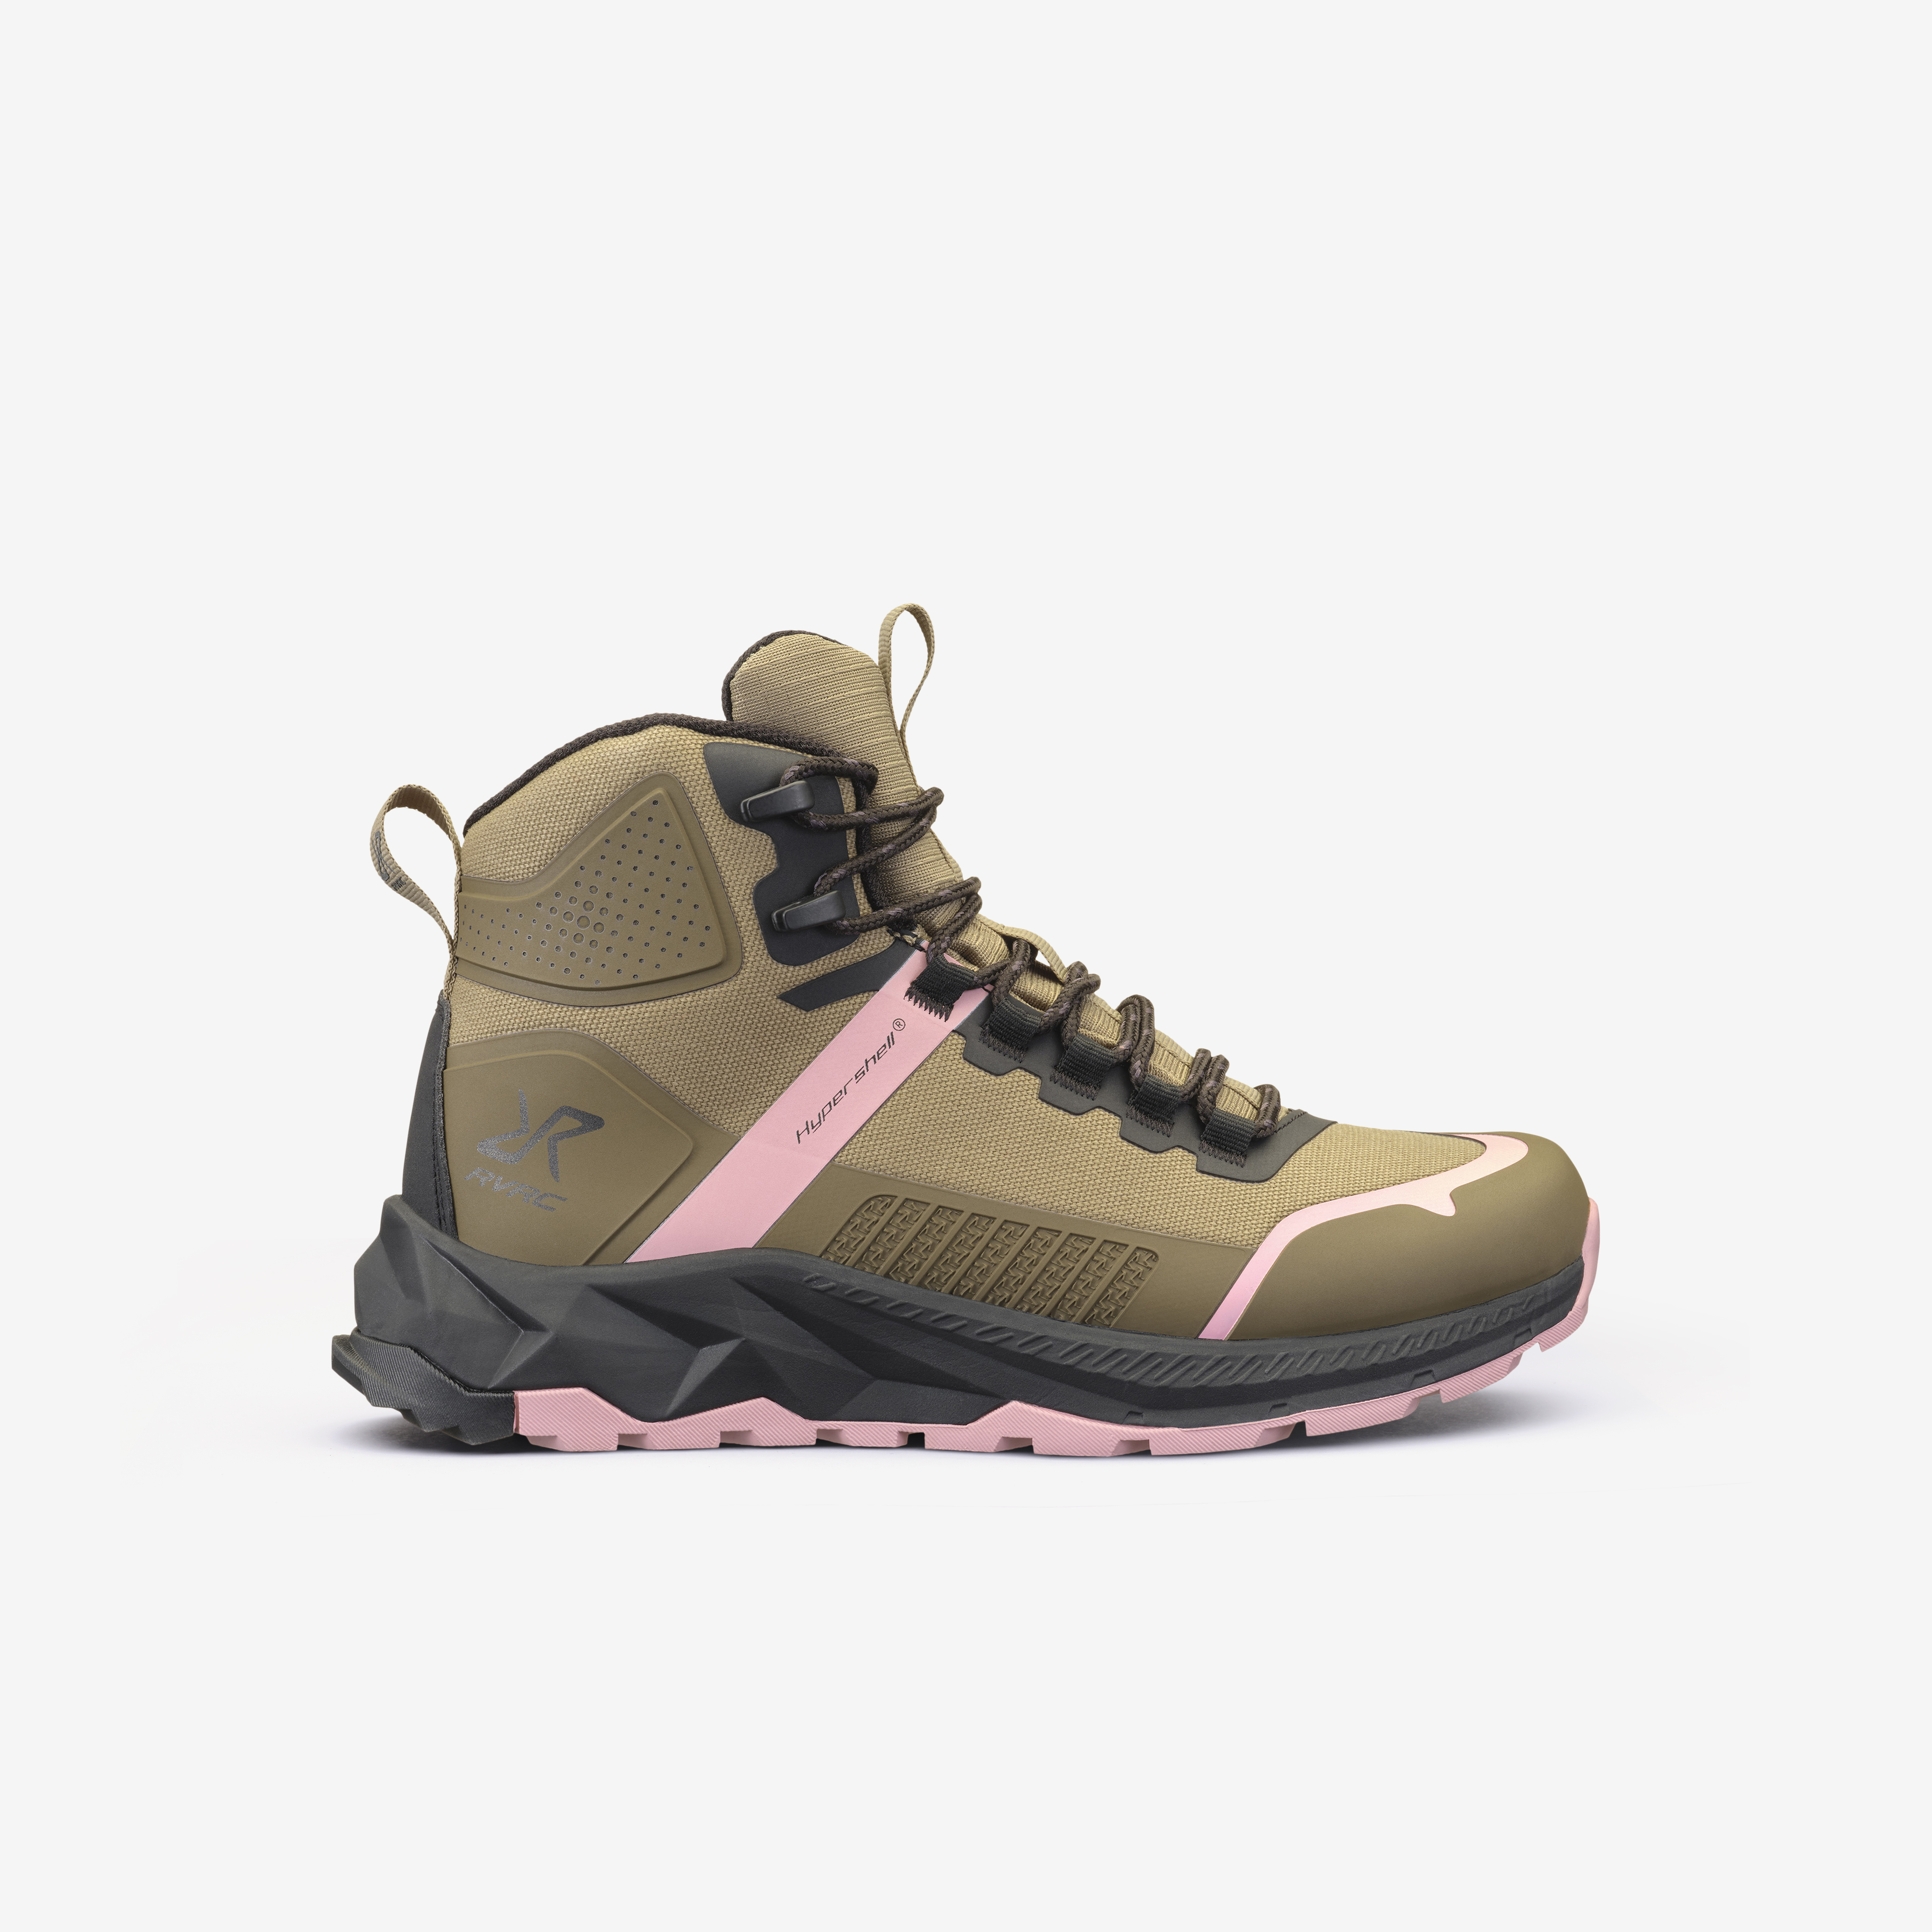 Phantom Trail Mid Waterproof Hiking Boots Khaki/Dusty Pink Naiset